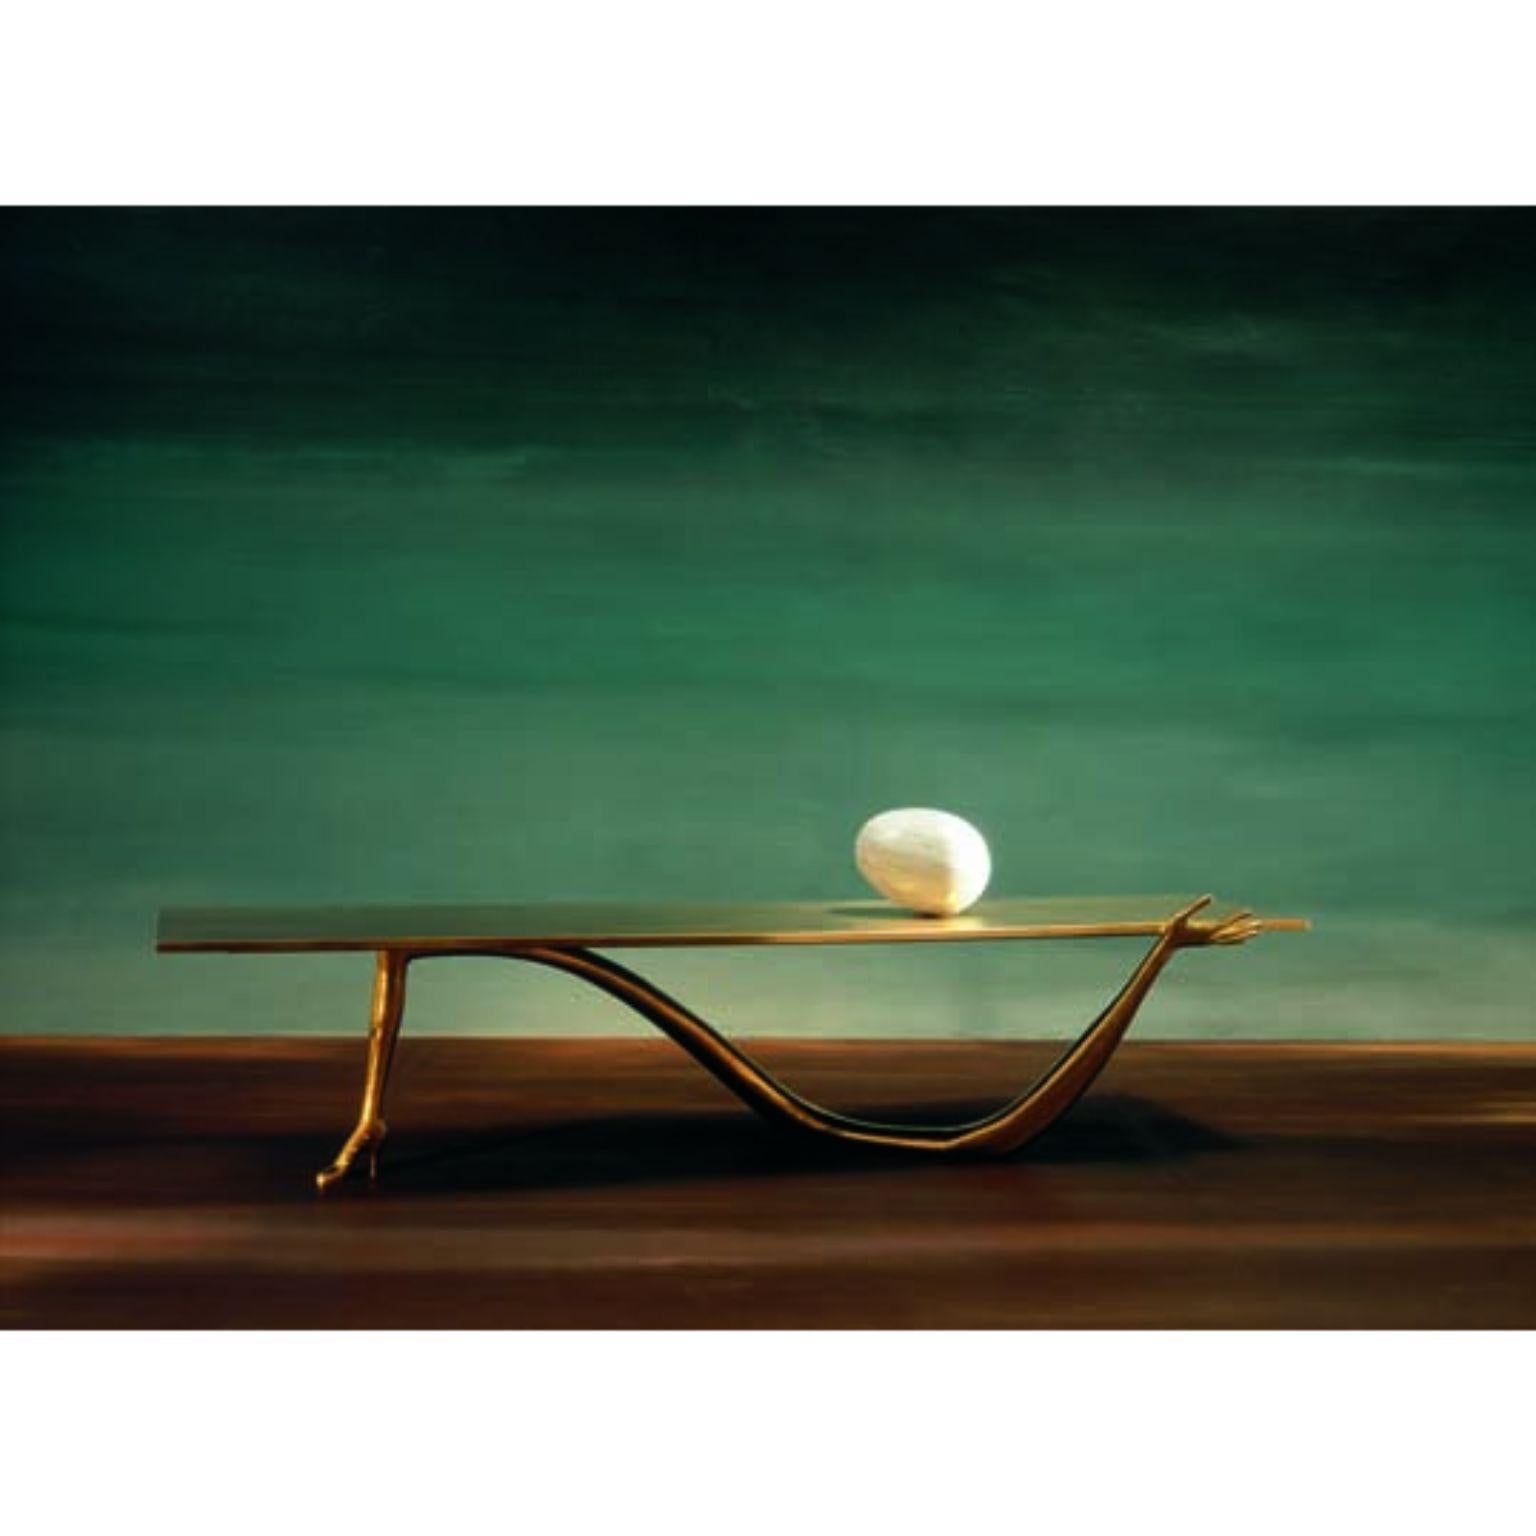 Leda low table, Salvador Dalí 
Design inspired on an artwork by Salvador Dalí
Dimensions: 51 x 190 x 61 H cm
Materials: Brass, marble

Design inspired on an artwork by Salvador Dalí: ‘Femme à tête de roses’ (1935). 
Legs in cast varnished brass or